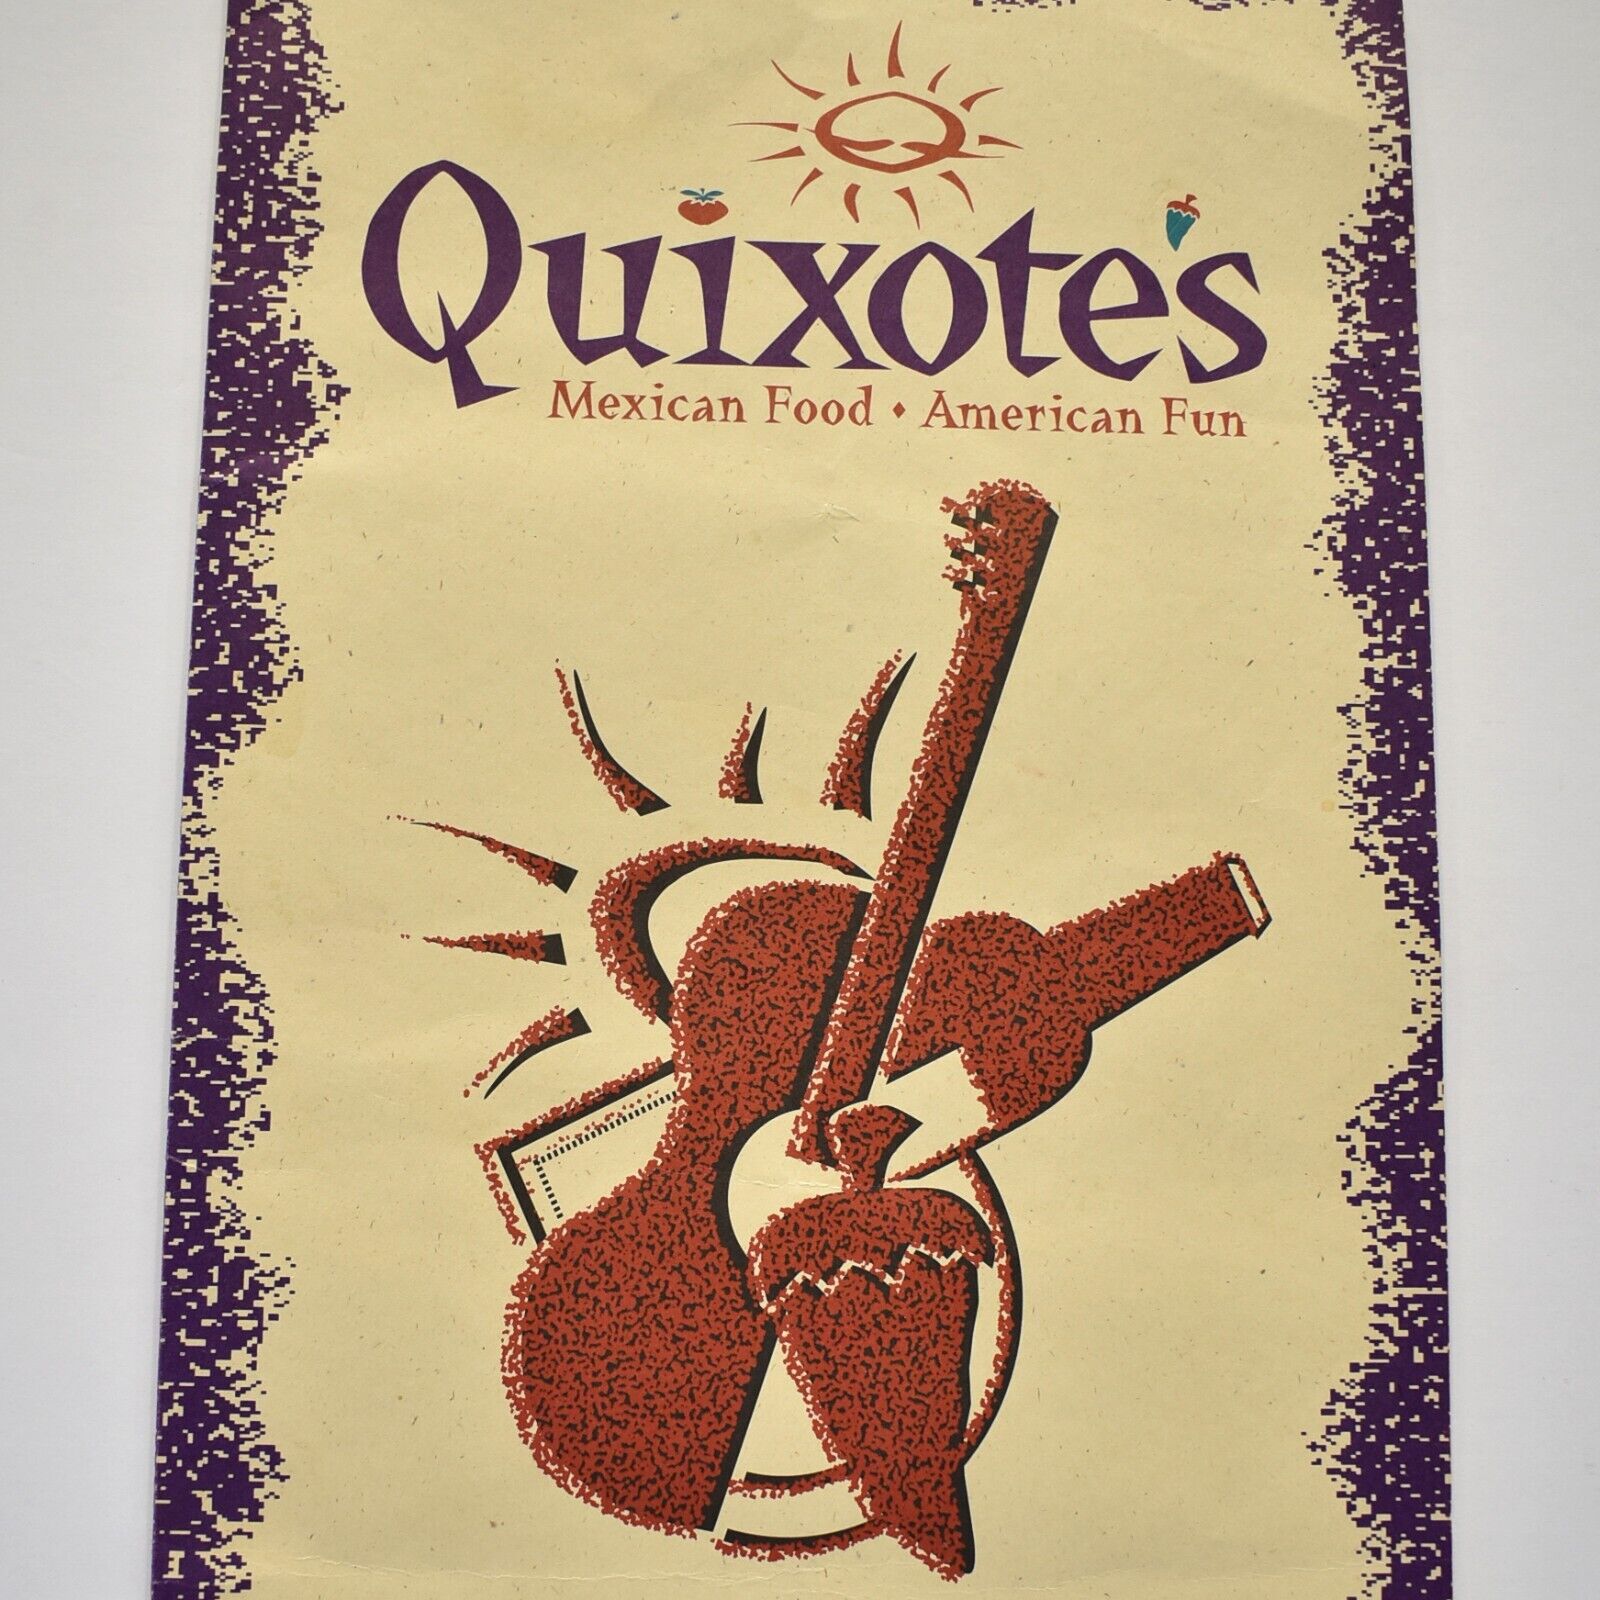 Vintage 1980s Don Quixote's Mexican Food Restaurant Menu American Fun